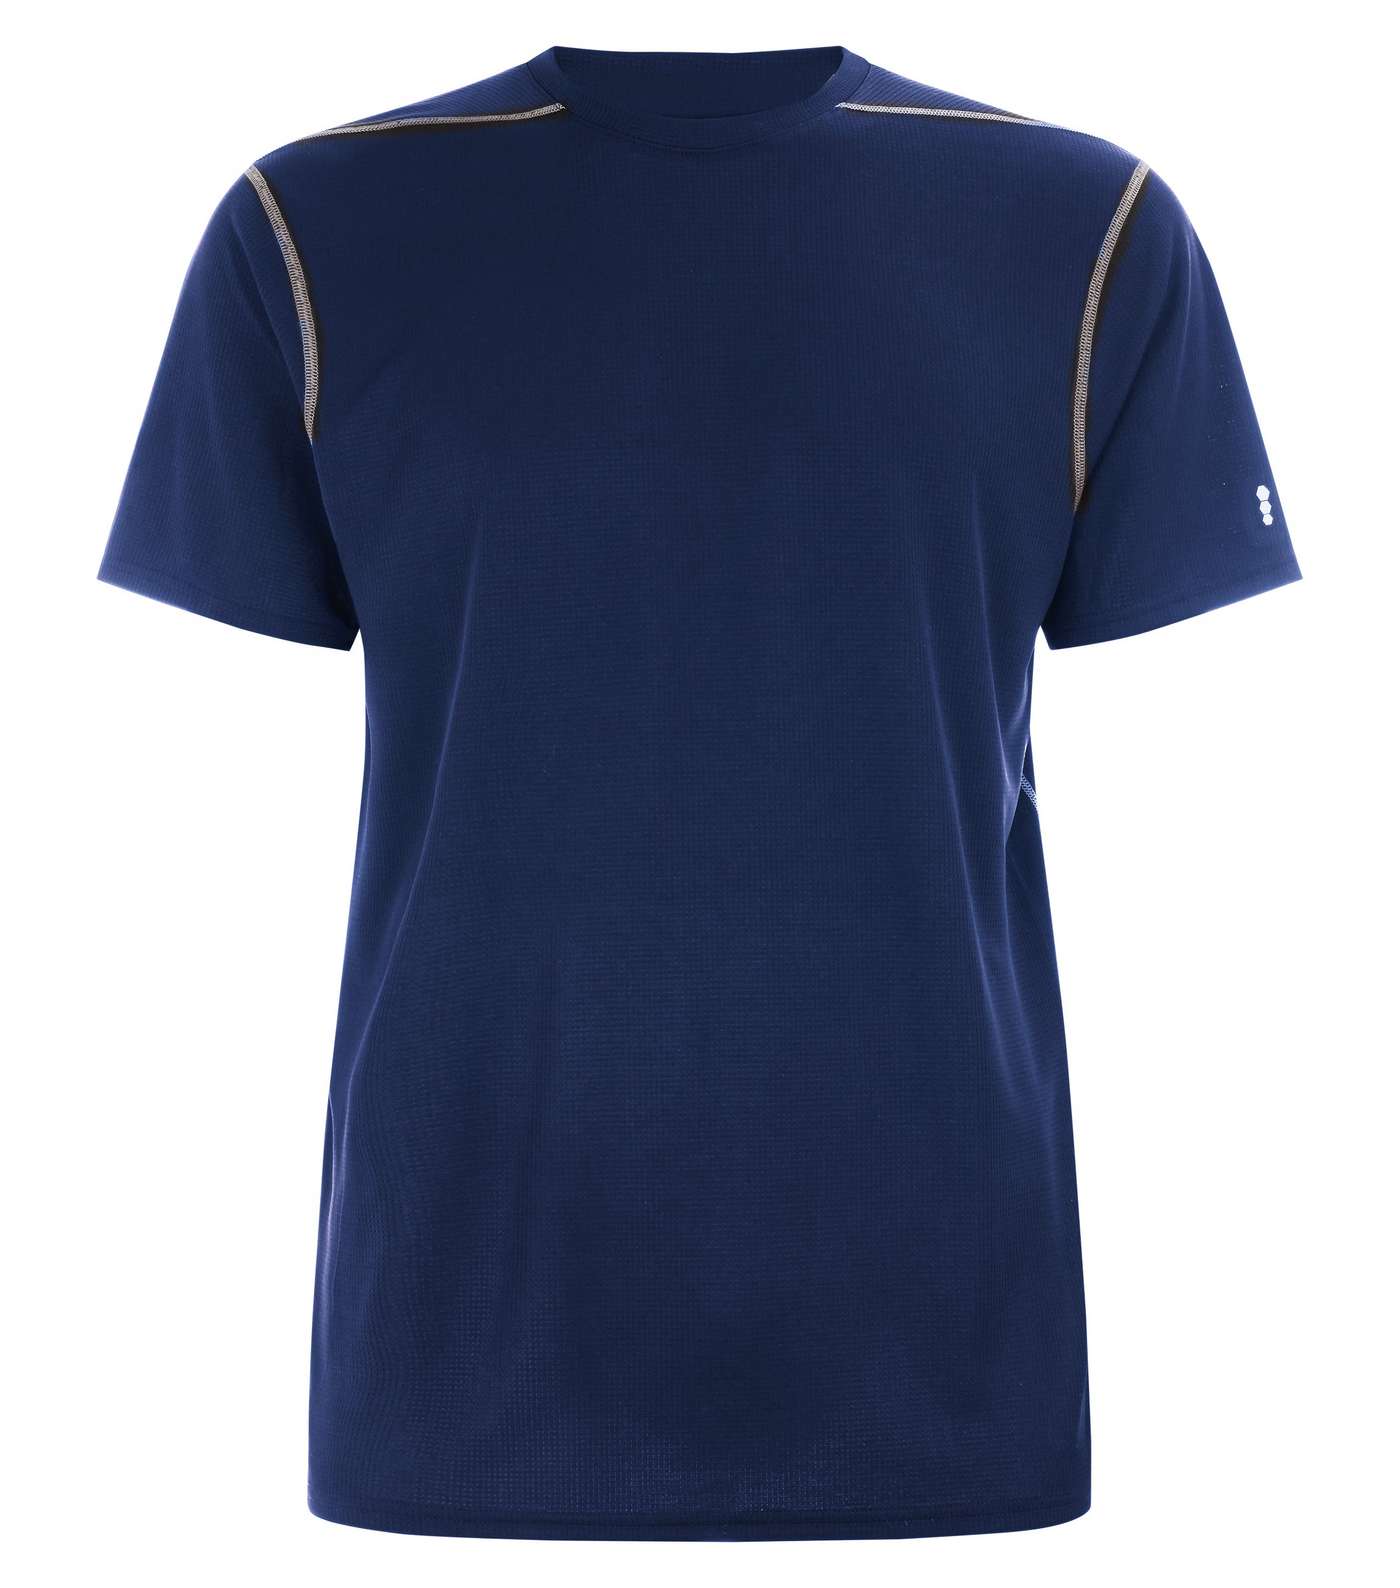 Navy Mesh Sports T-Shirt Image 4